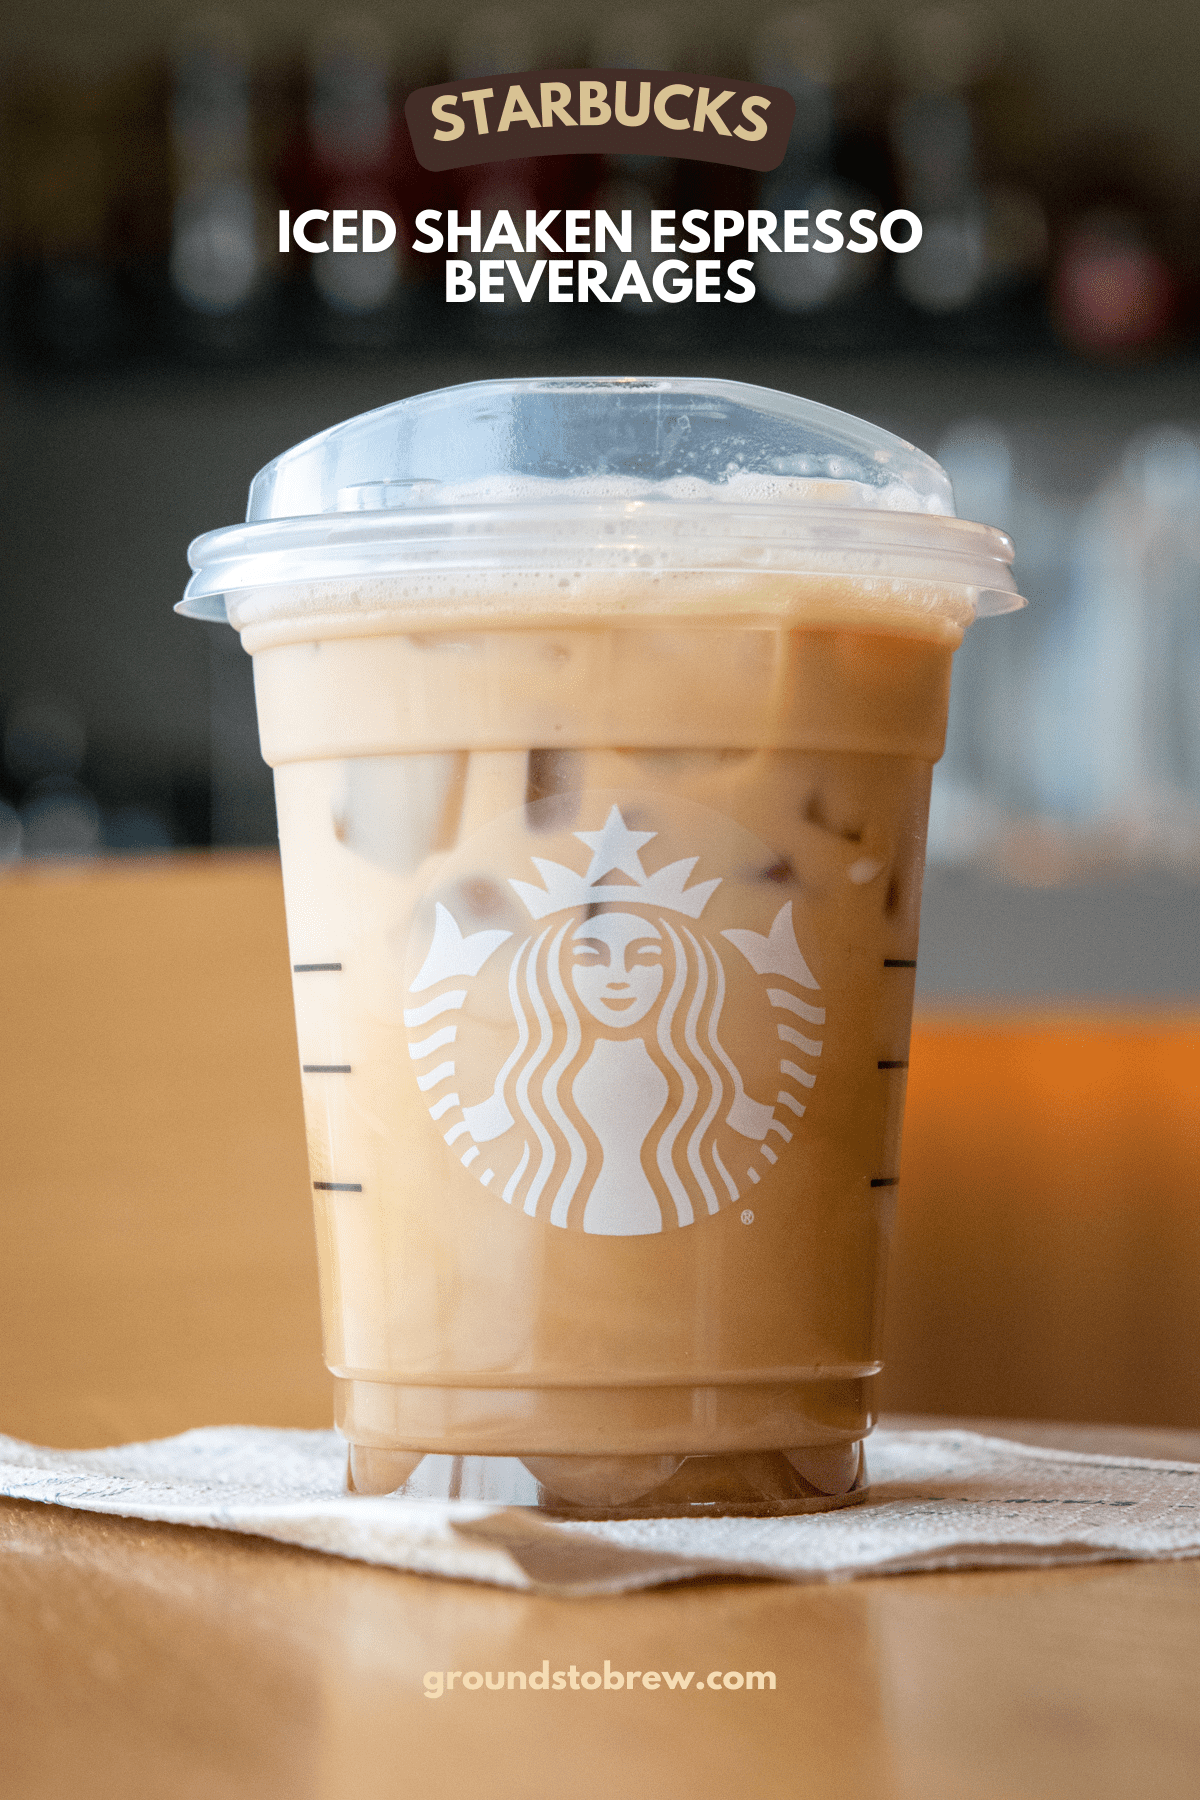 Iced Shaken Espresso Beverages at Starbucks.